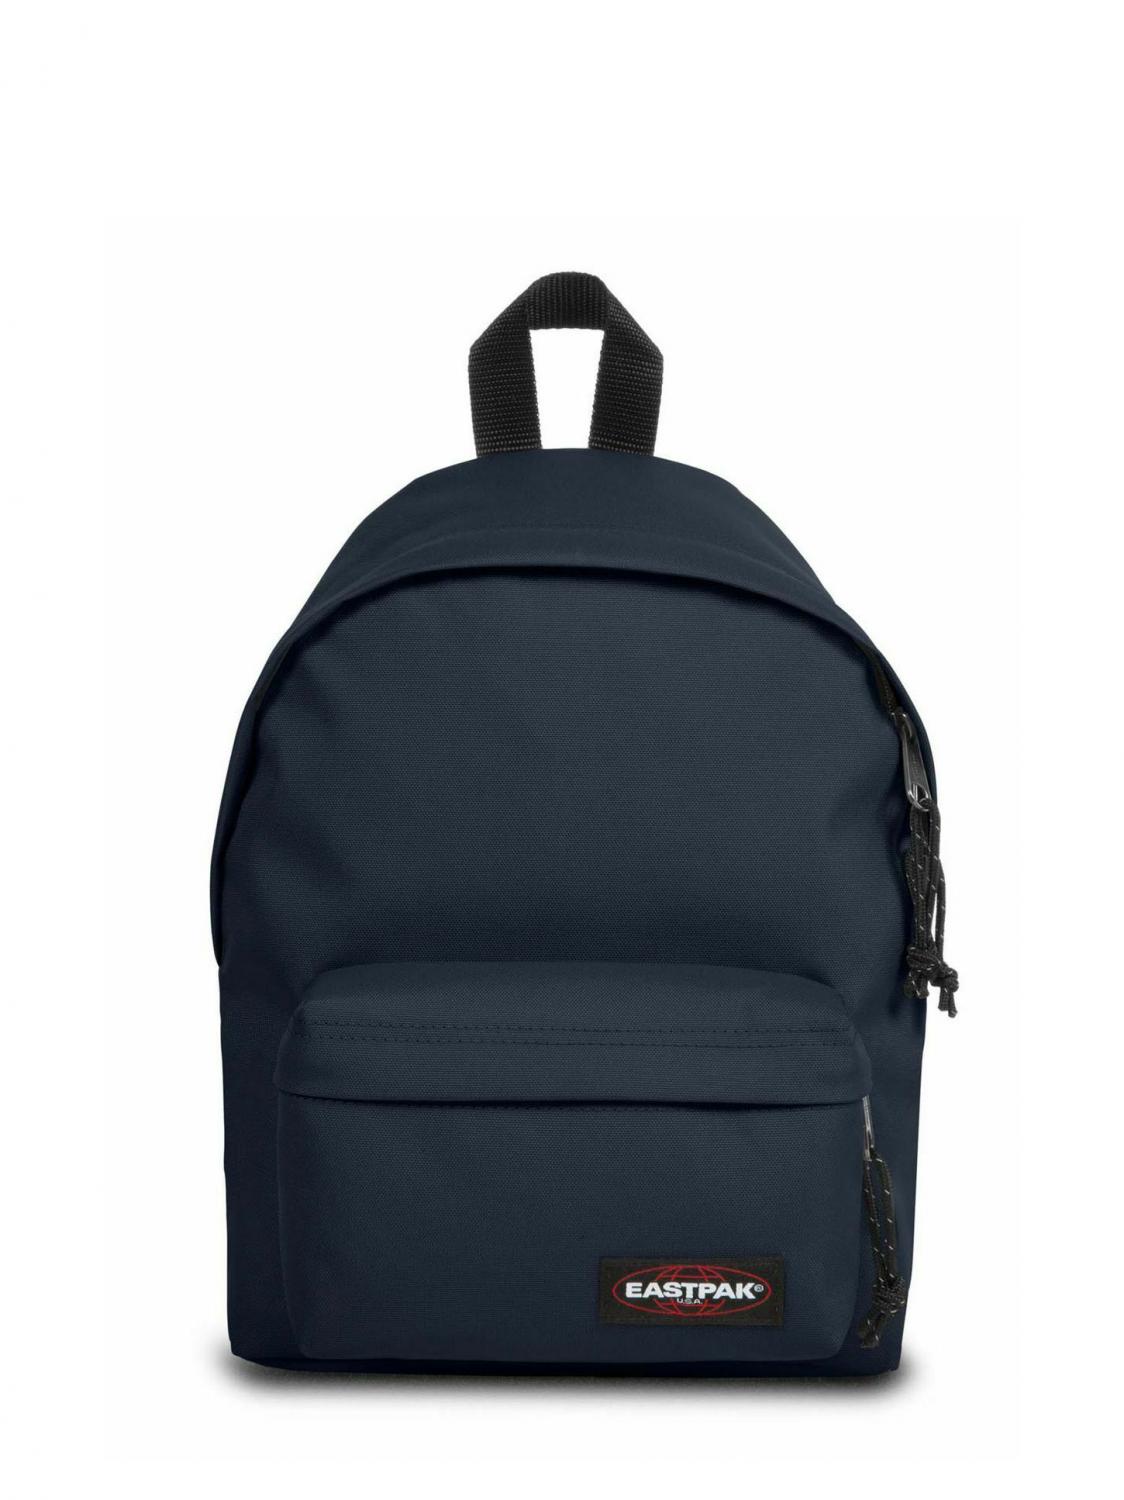 Eastpak Orbit Small Size Backpack Ultramari - Buy On Le Outlet!